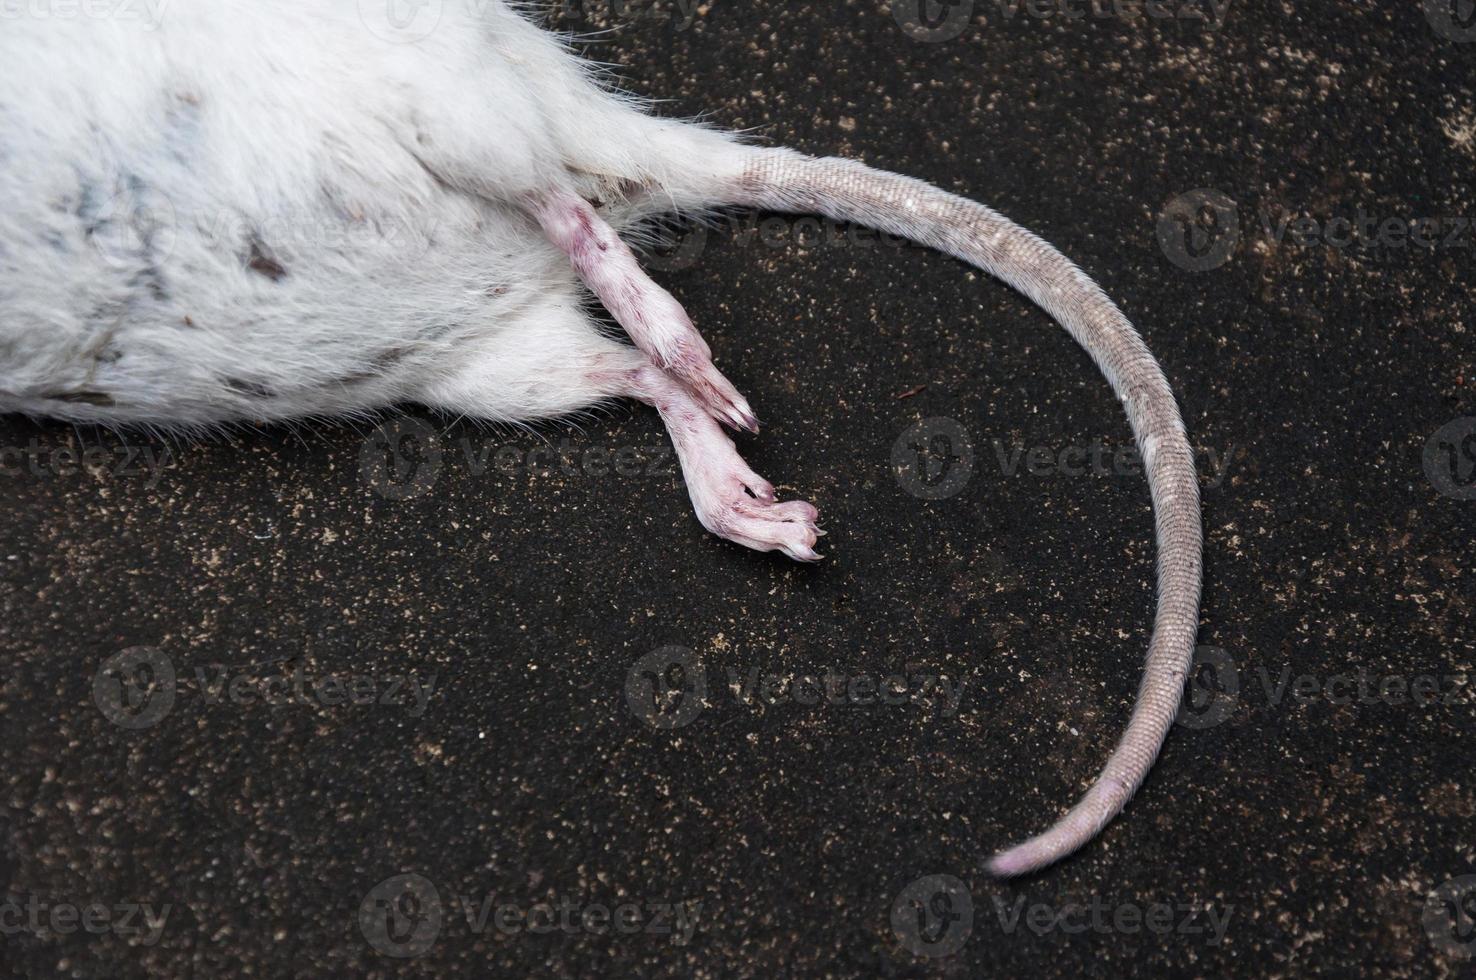 Dead white rats on floor,The dead rat on a street photo